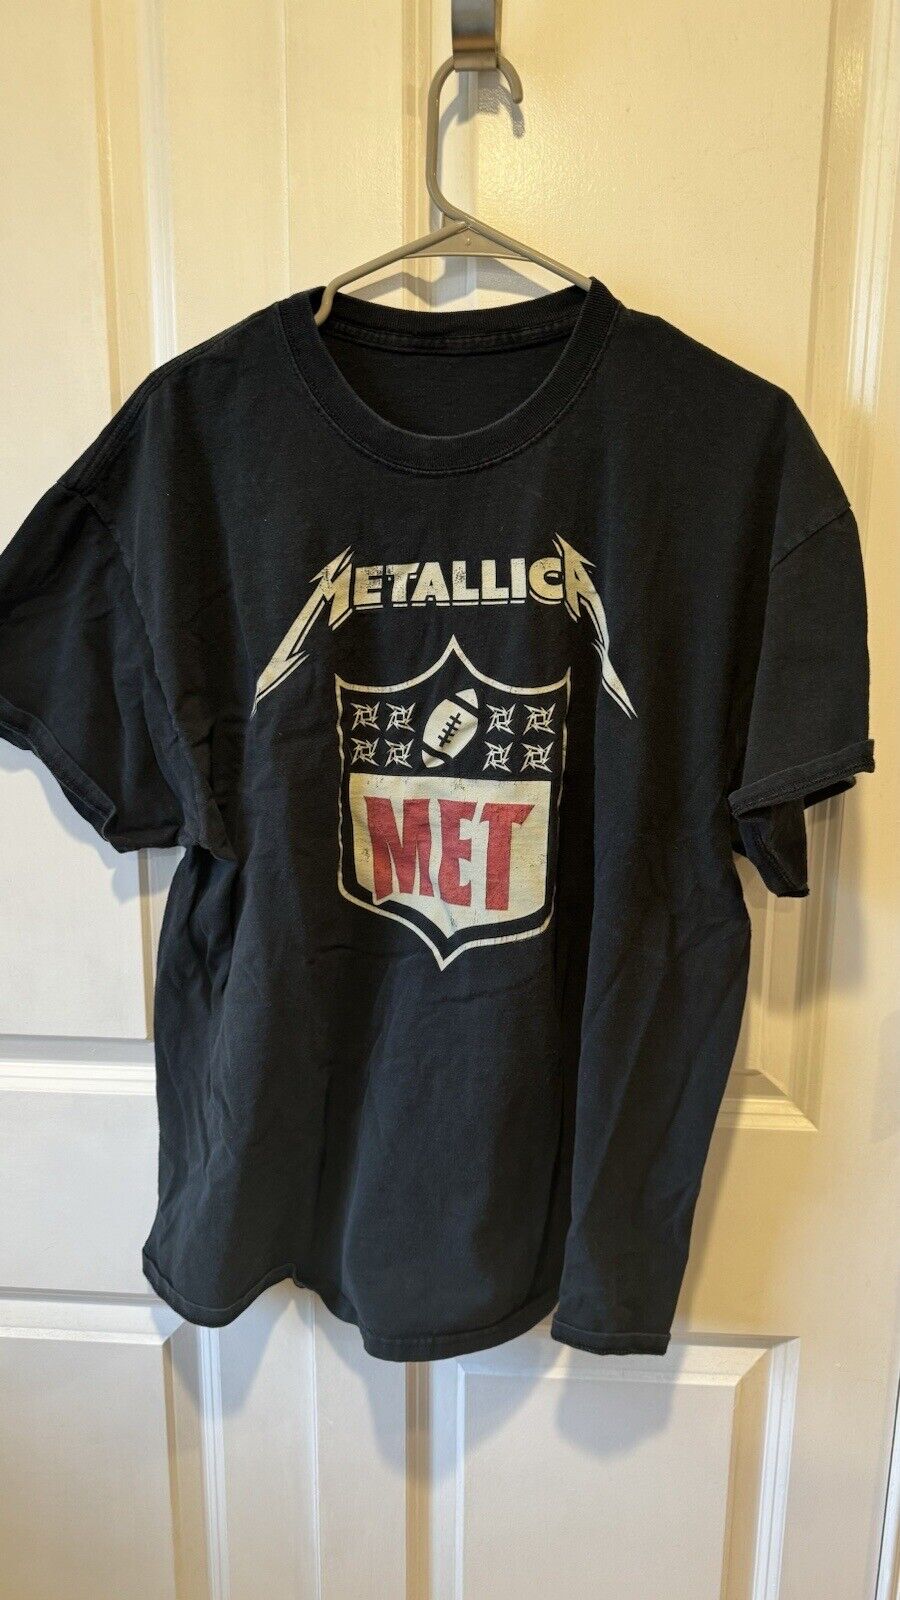 Metallica - The Night Before “NFL” Style - Shirt … - image 1